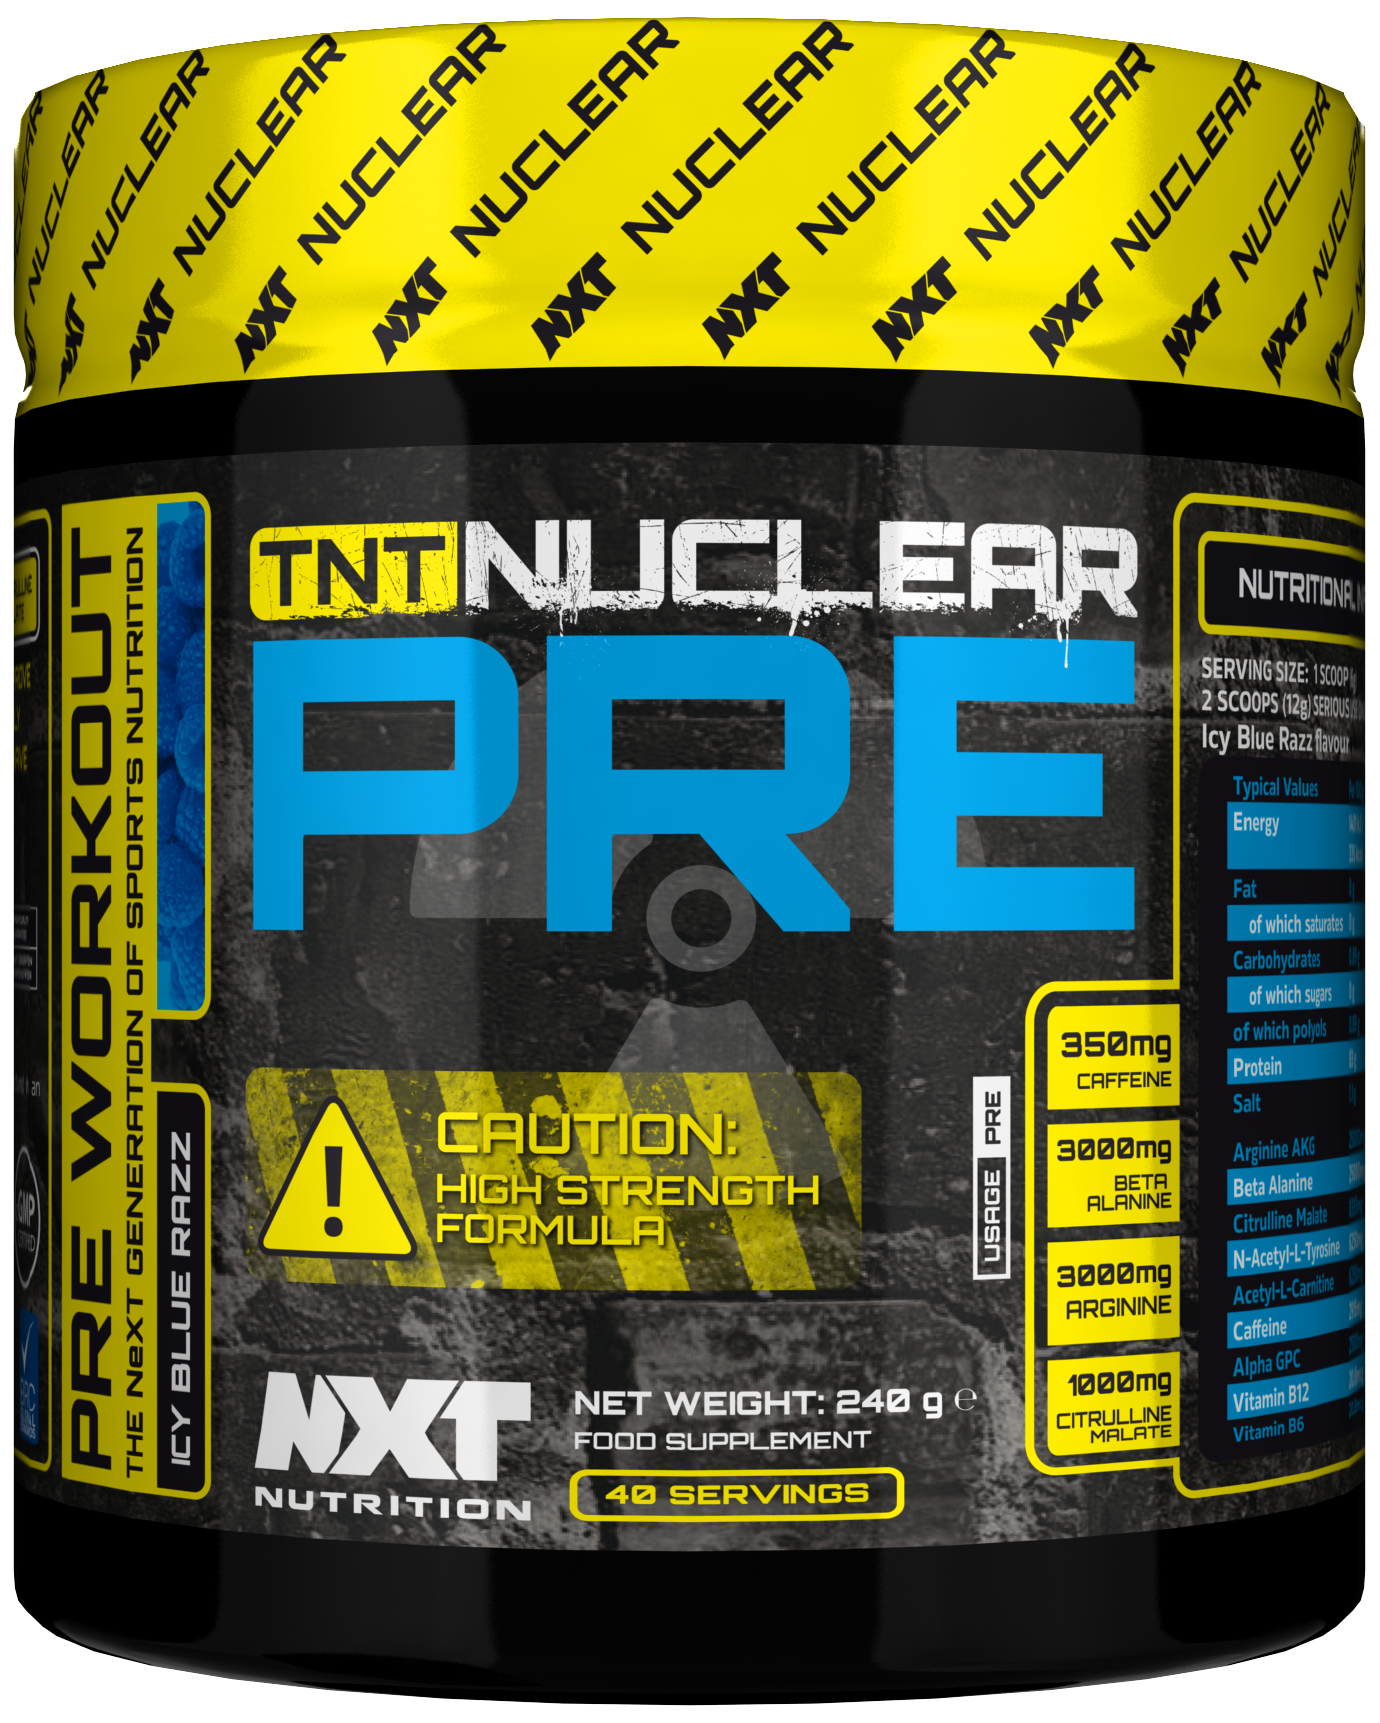 TNT Nuclear Pre